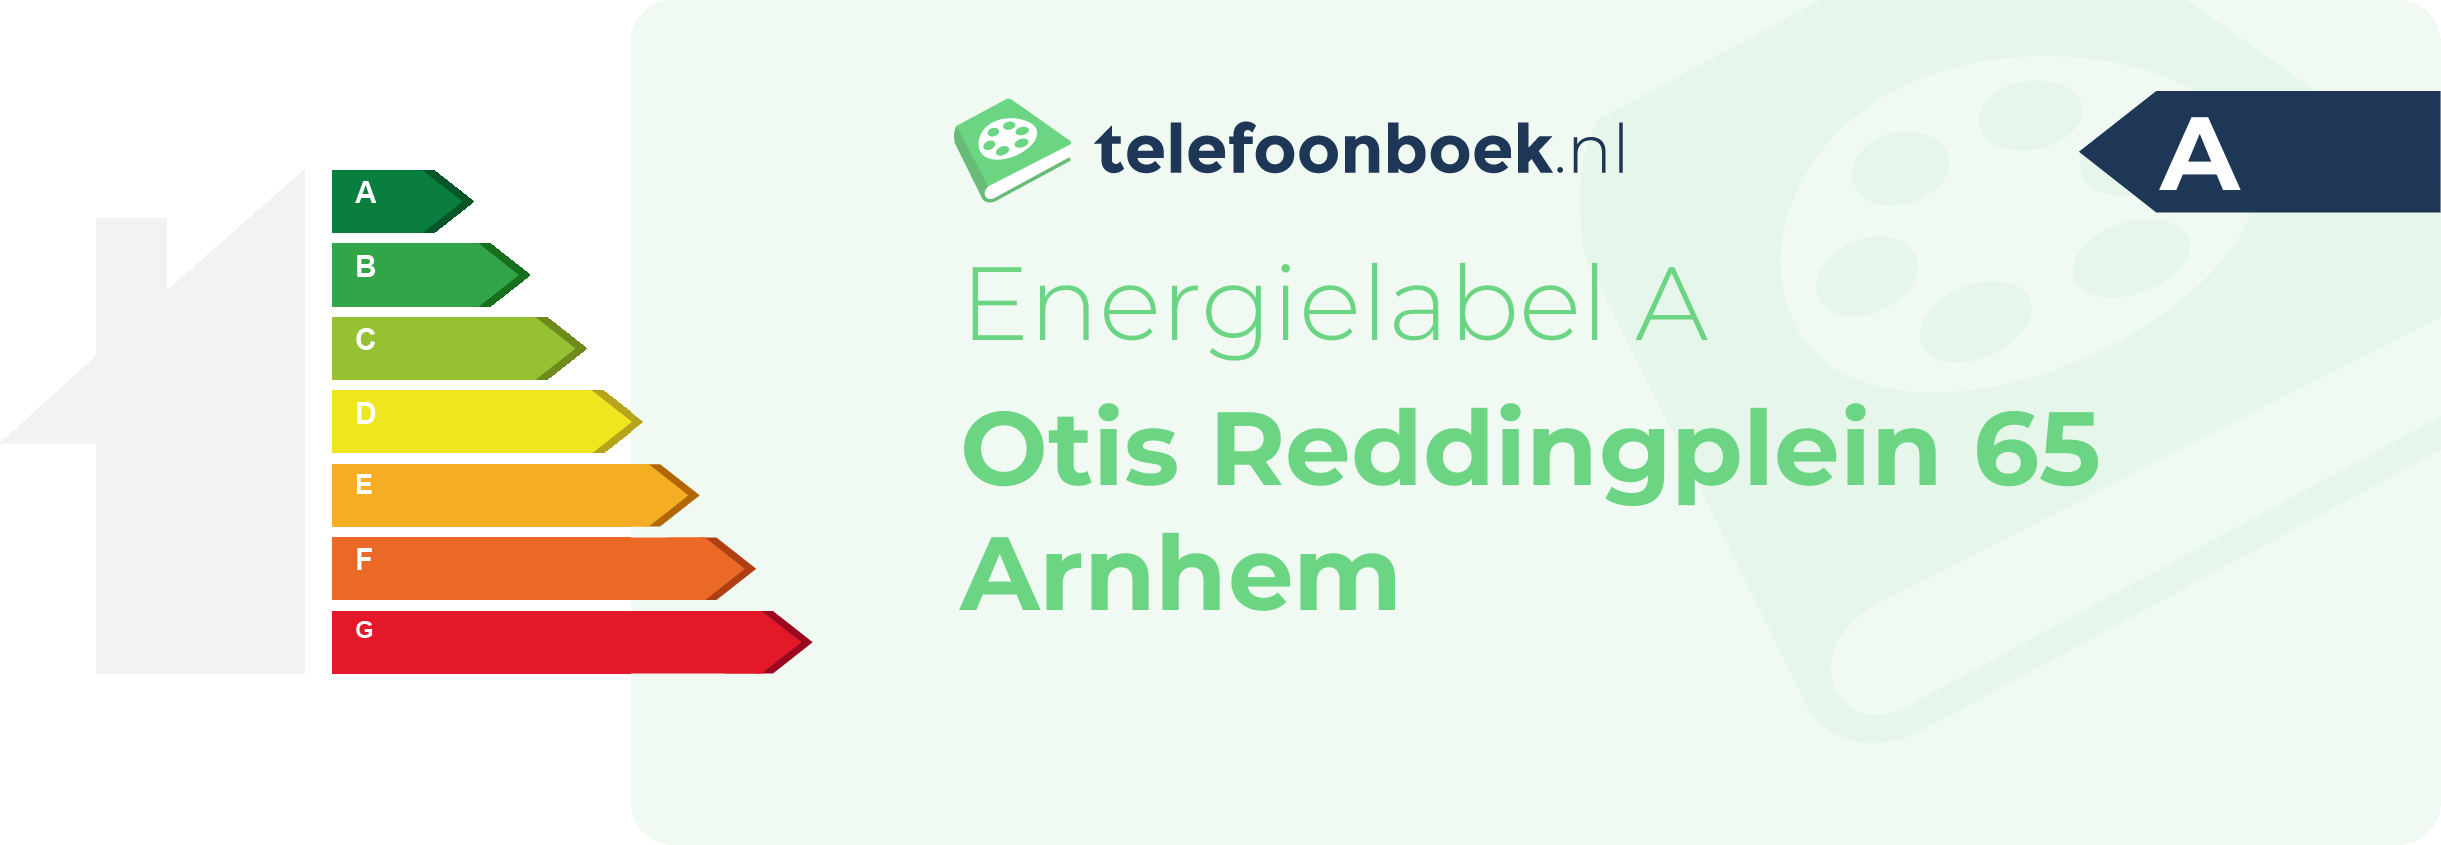 Energielabel Otis Reddingplein 65 Arnhem